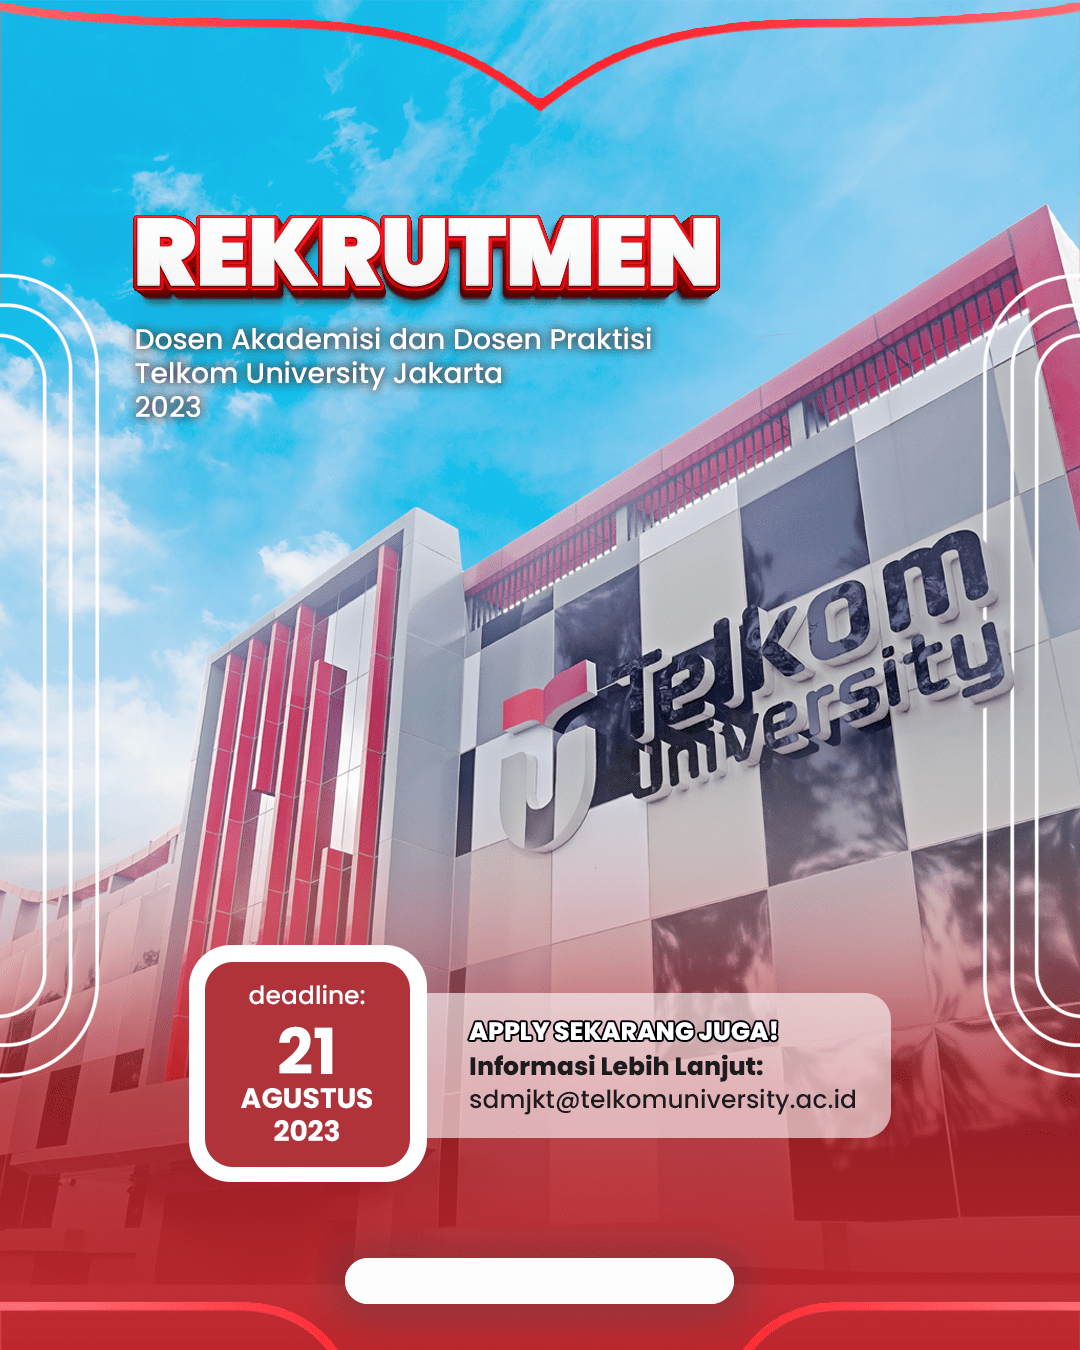 Rekrutmen Dosen Akademisi dan Praktisi Telkom University Jakarta 2023